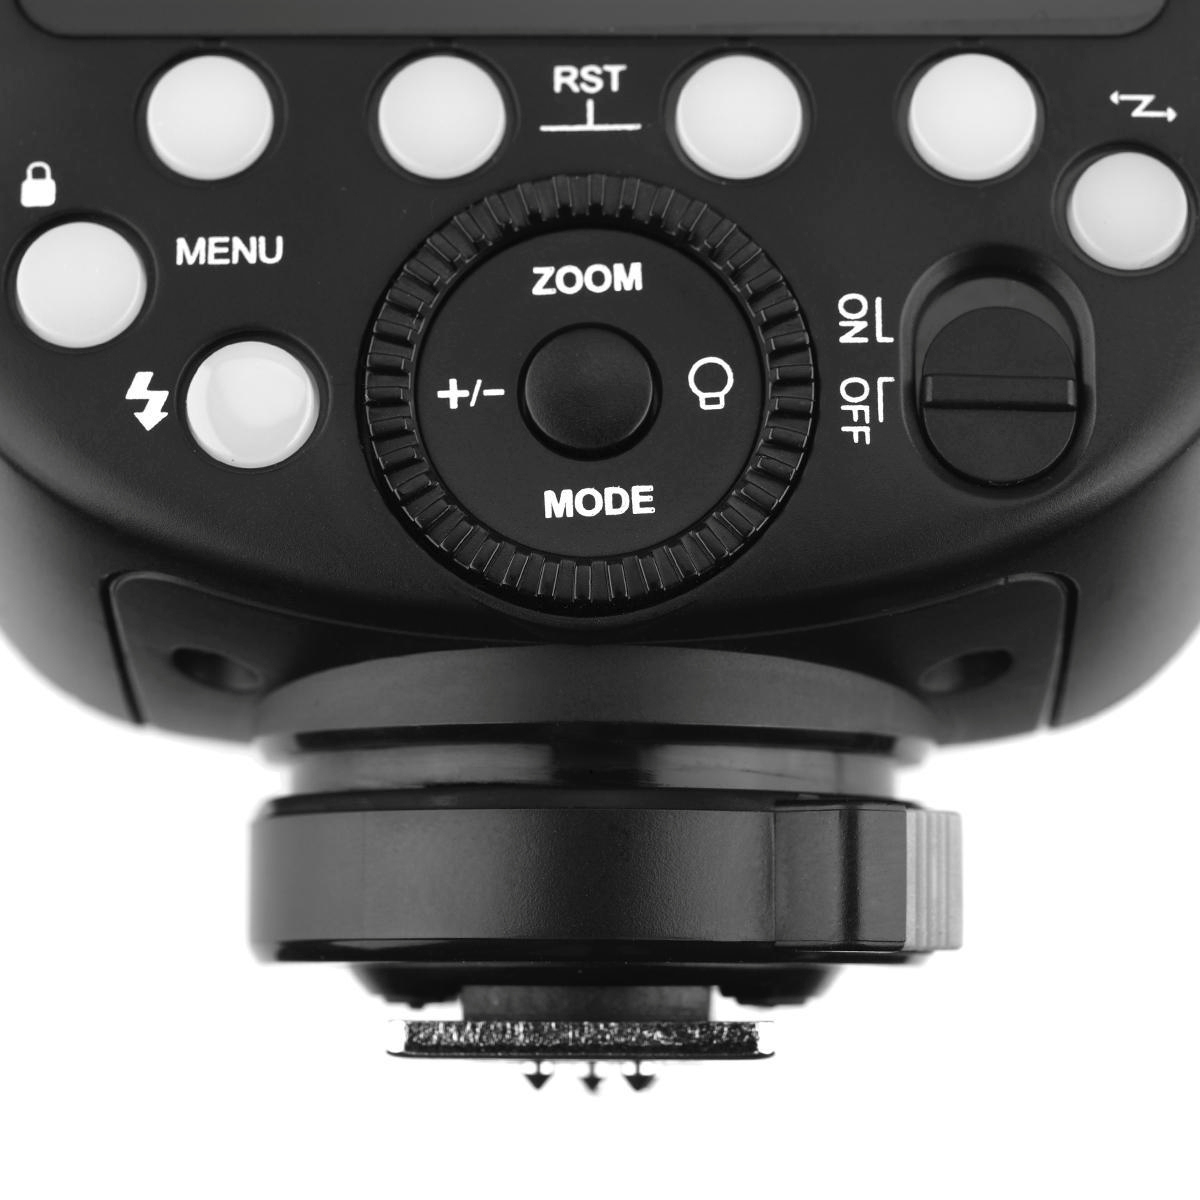 Akku inkl. Canon Systemblitzgerät (E-TTL) V1C GODOX für